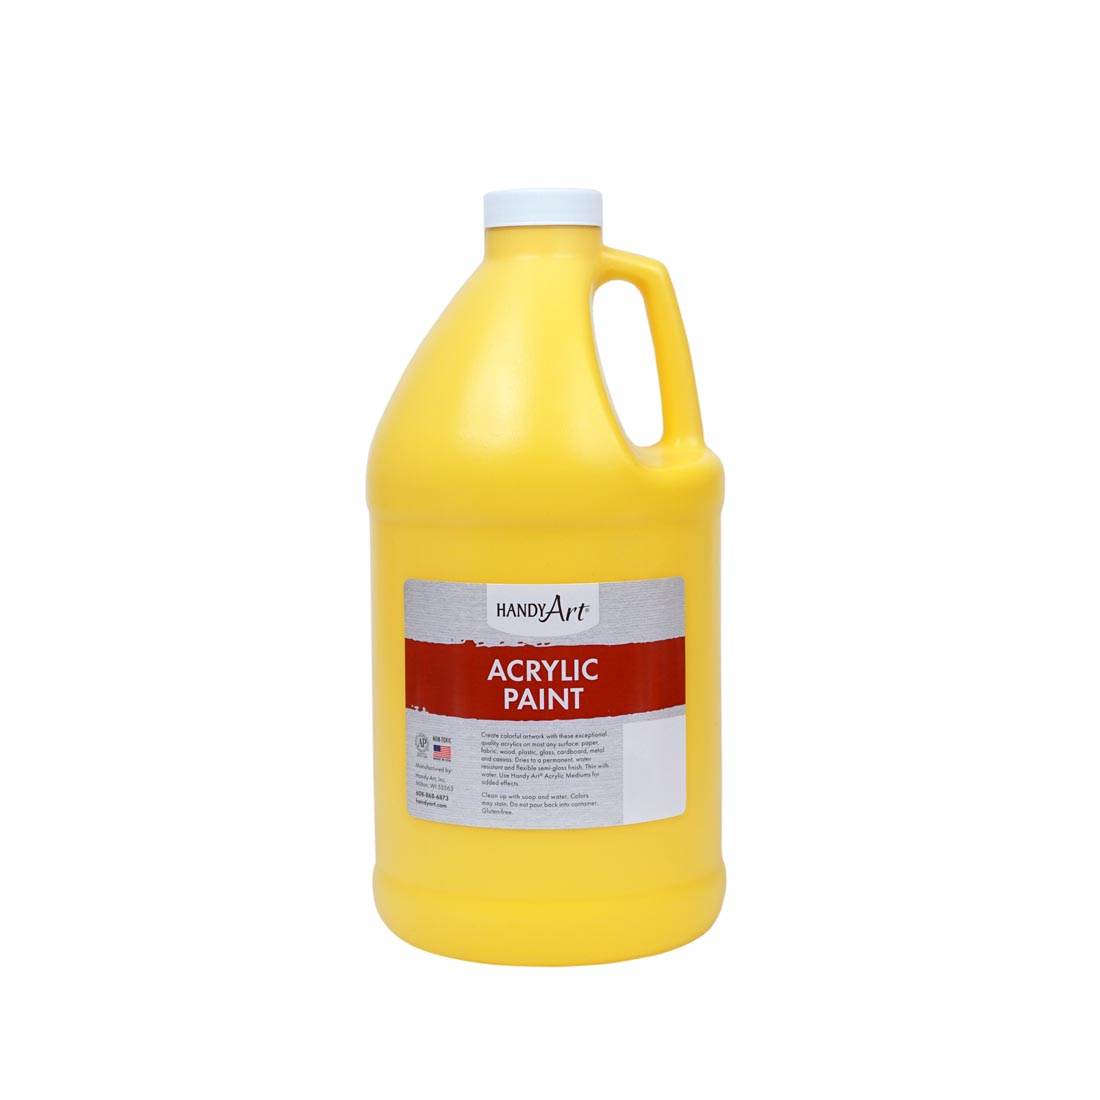 1/2 Gallon of Primary Yellow Handy Art Acrylic Paint